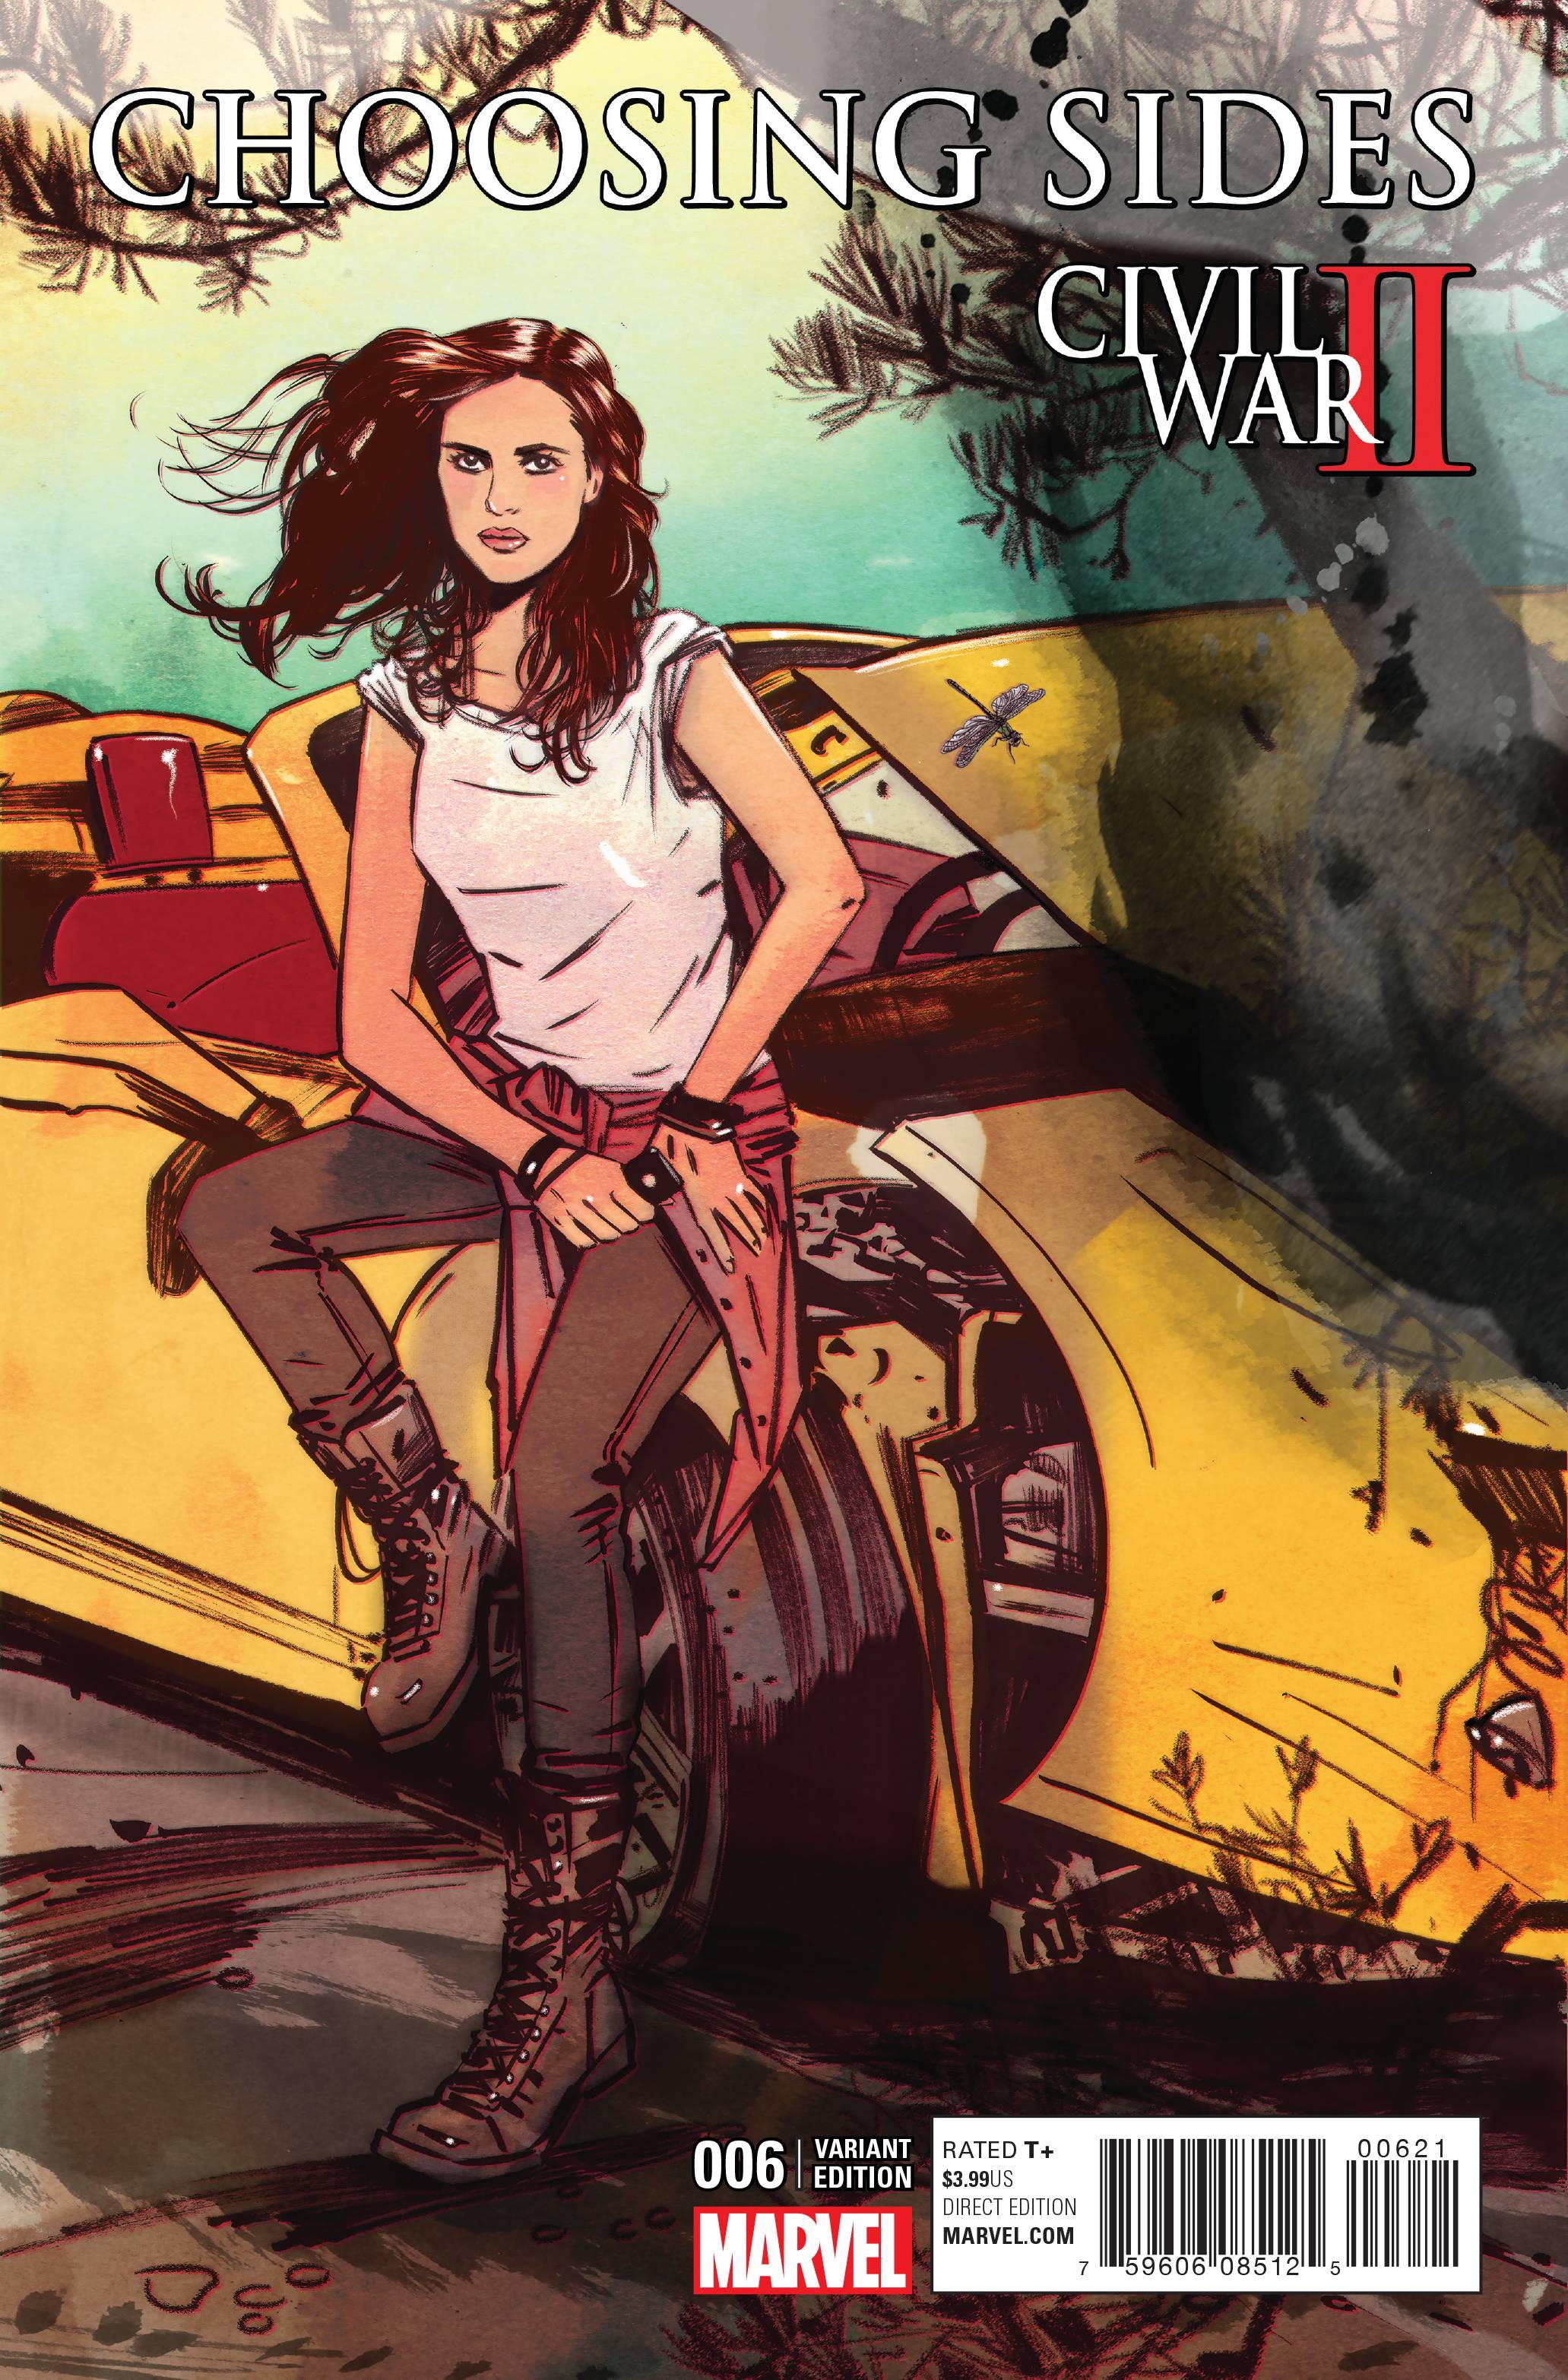 Civil War II: Choosing Sides 6 Var A Comic Book NM